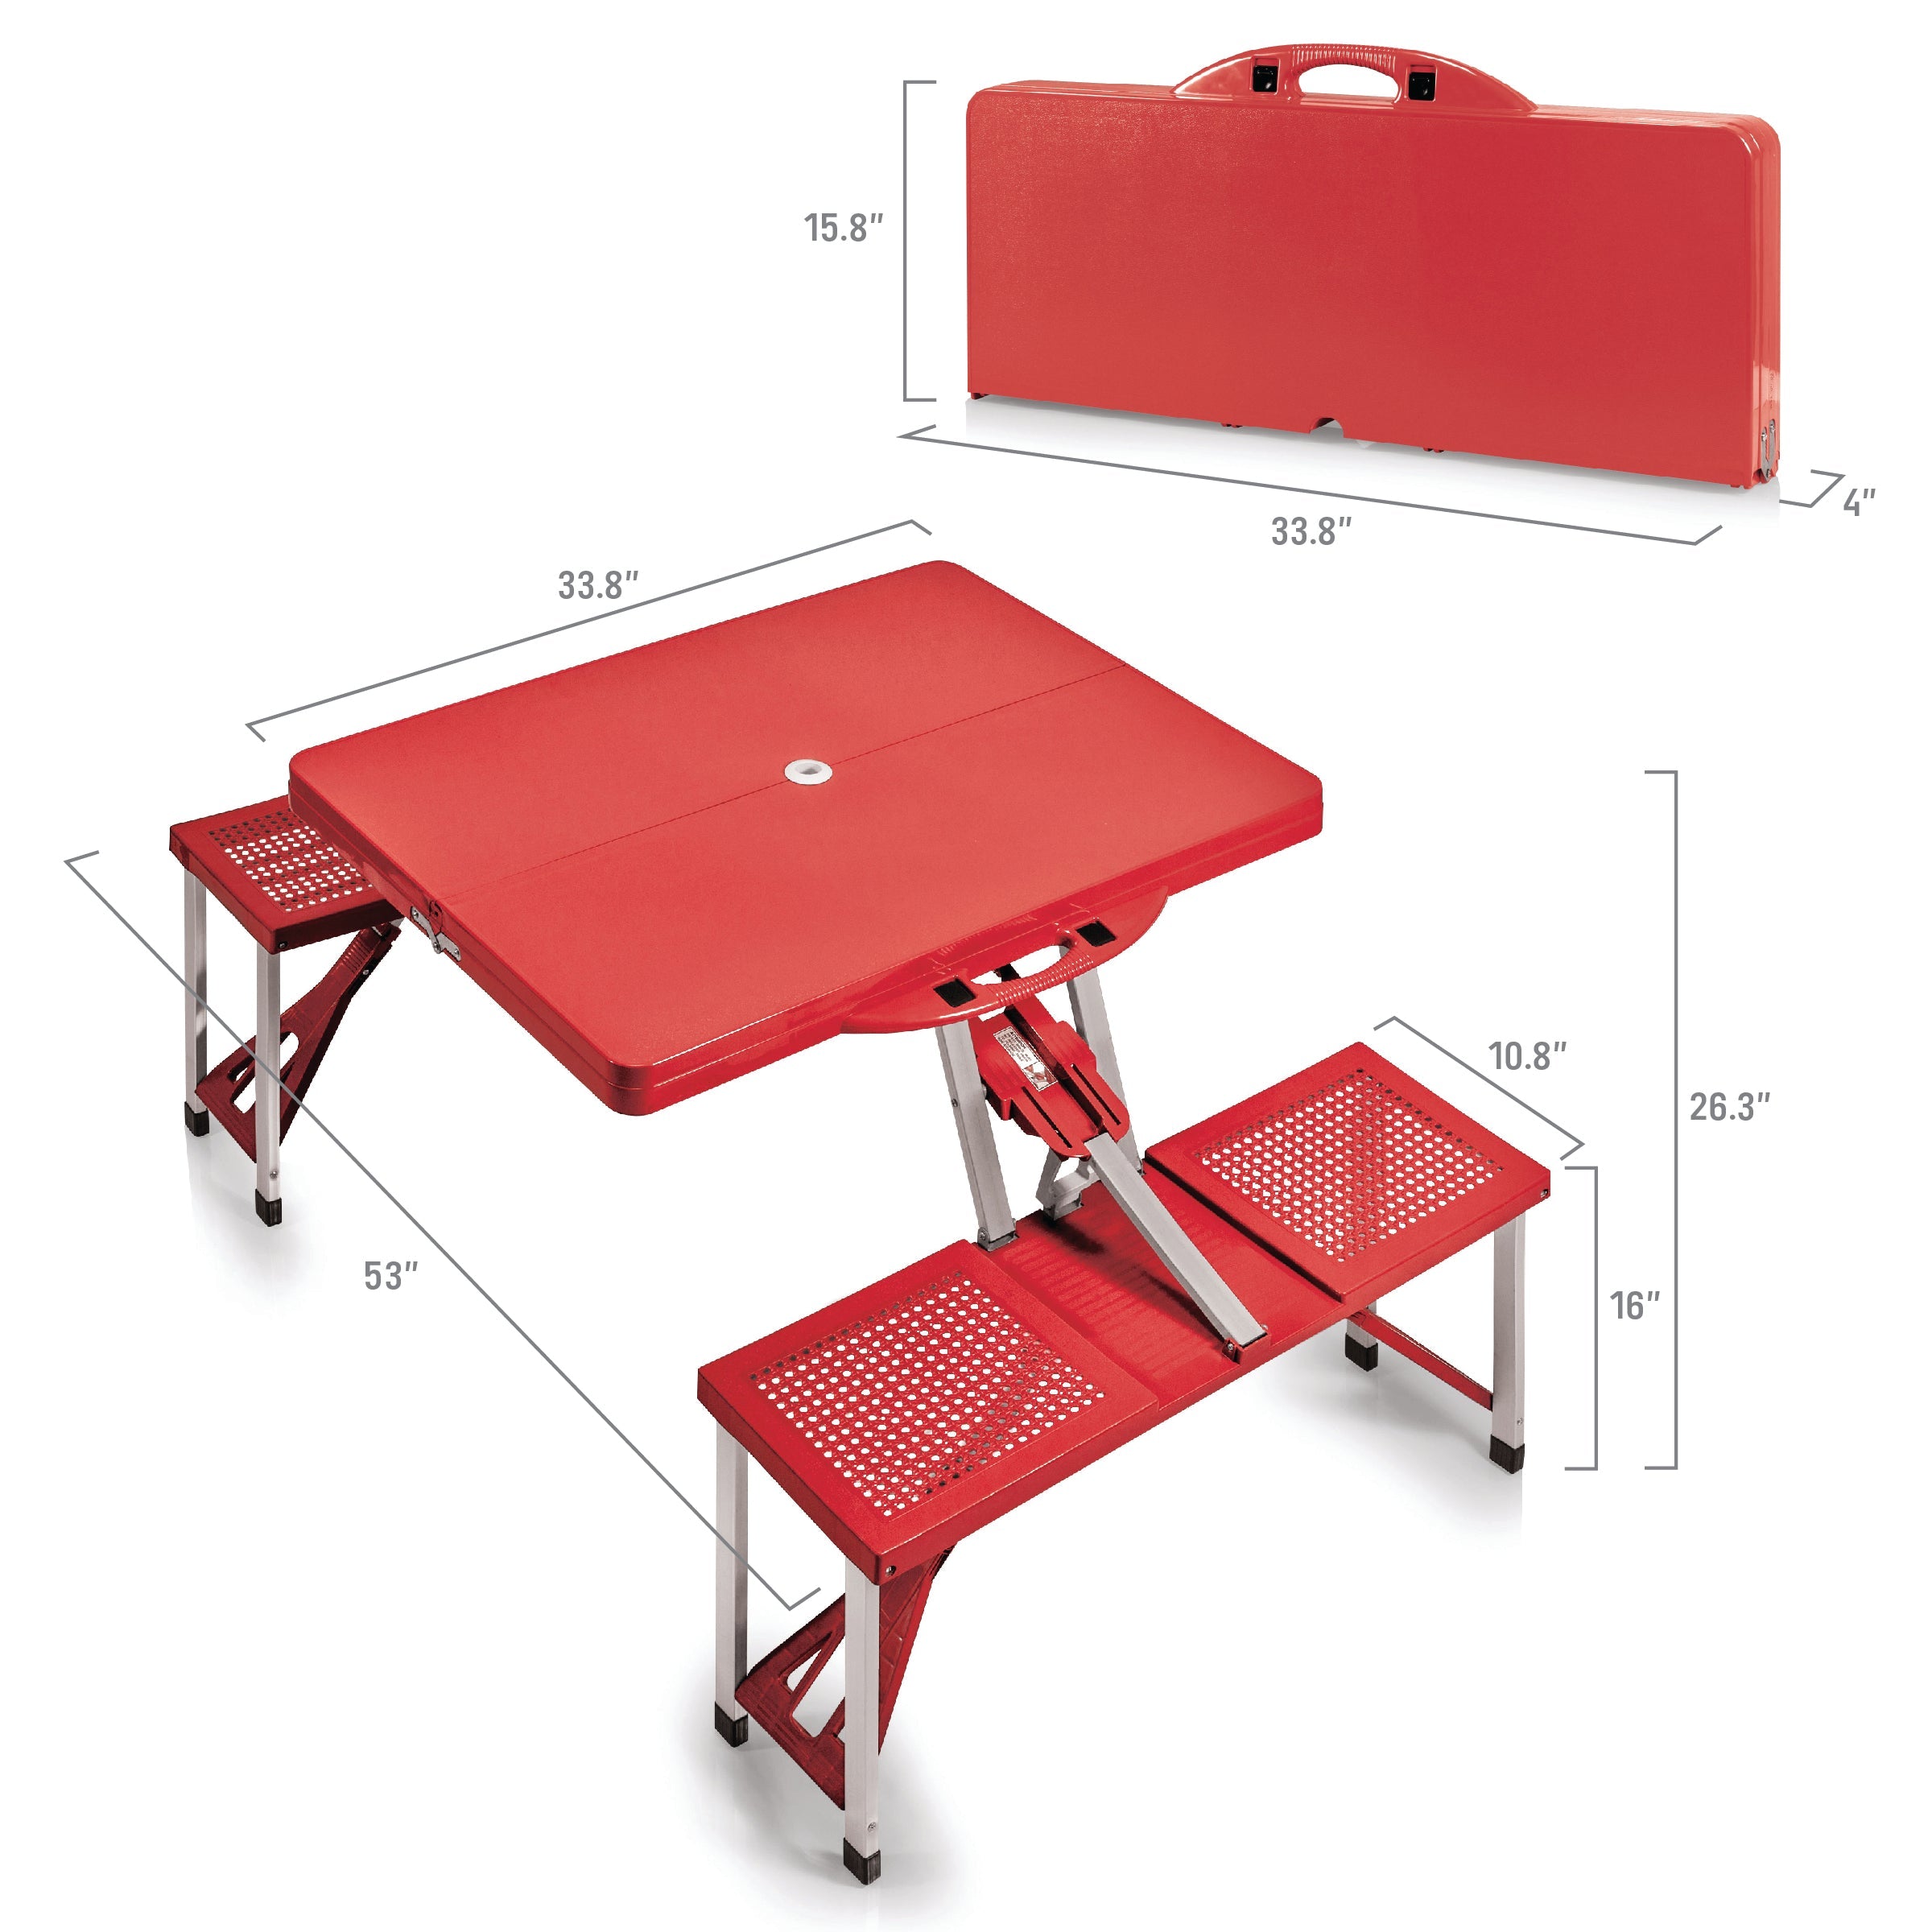 Baseball Diamond - Los Angeles Angels - Picnic Table Portable Folding Table with Seats